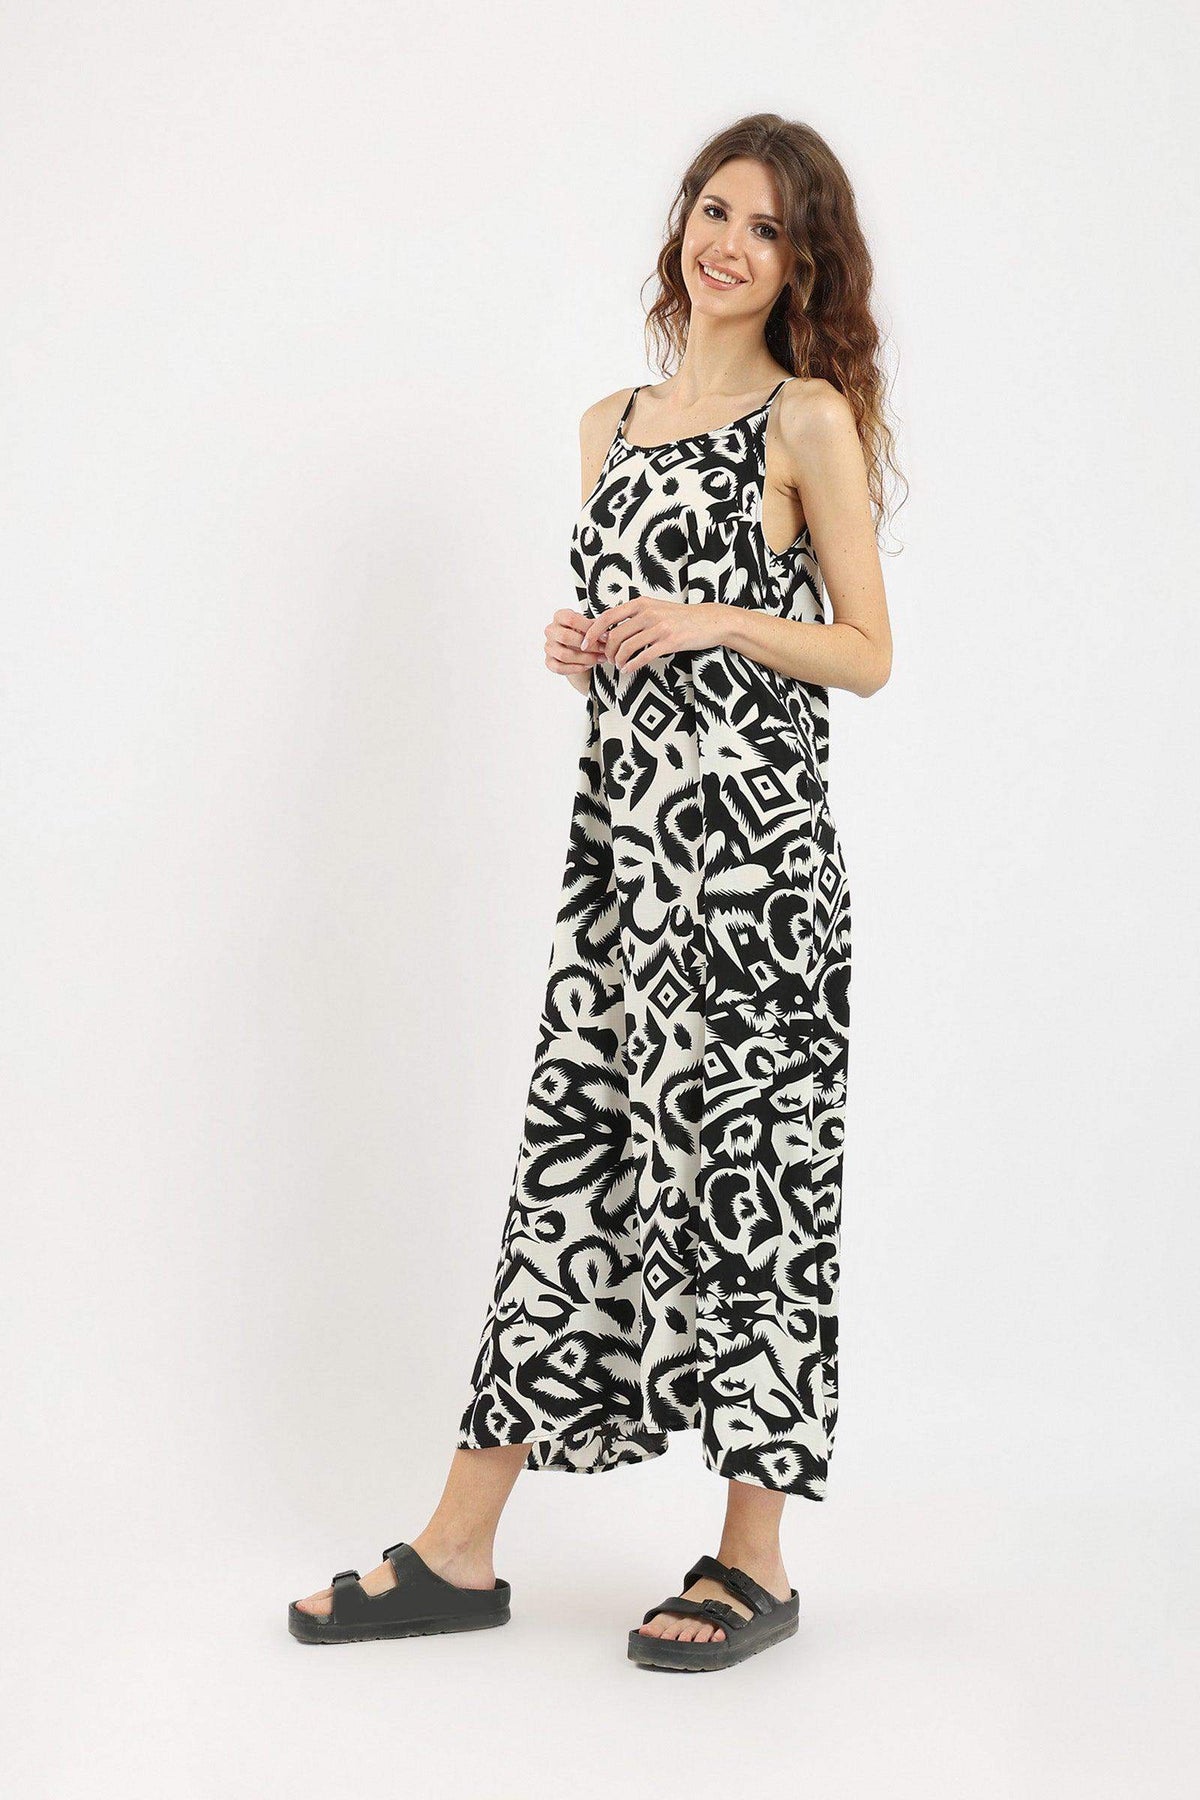 Black & White Sleeveless Dress - Carina - كارينا